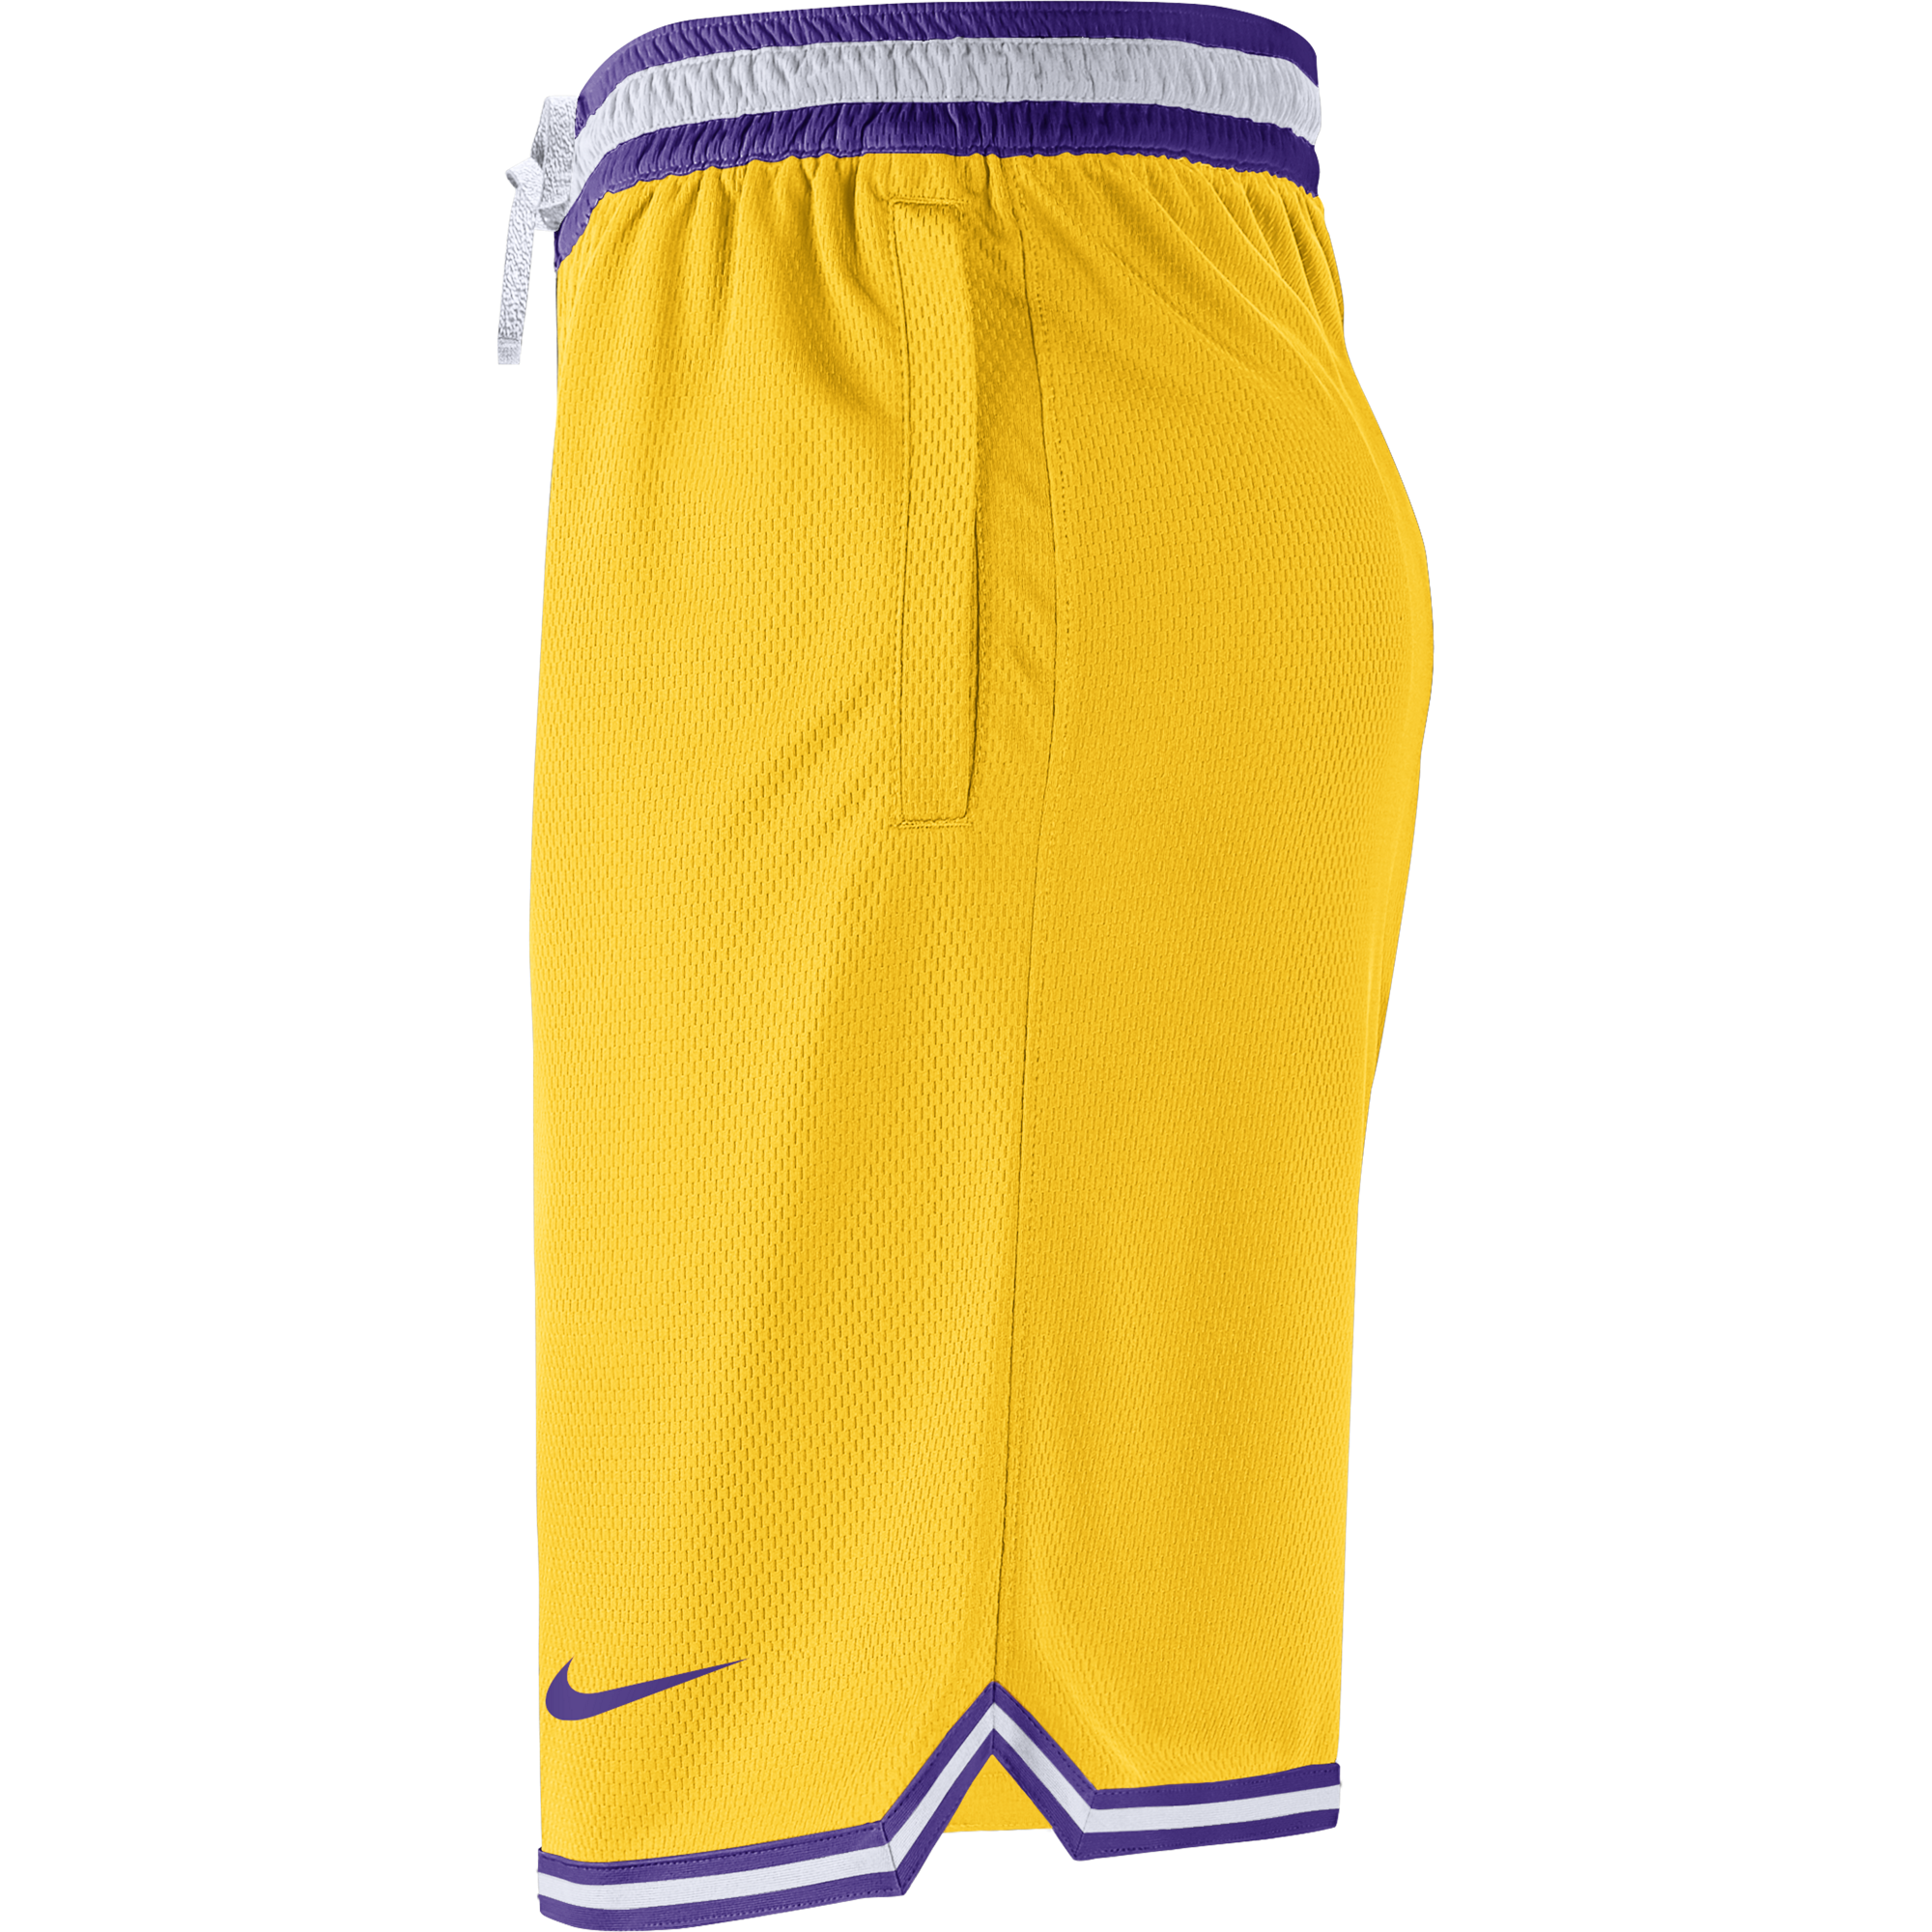 Nike Los Angeles Lakers City Edition Dri-FIT NBA Swingman Shorts Purple -  FIELD PURPLE/COAST